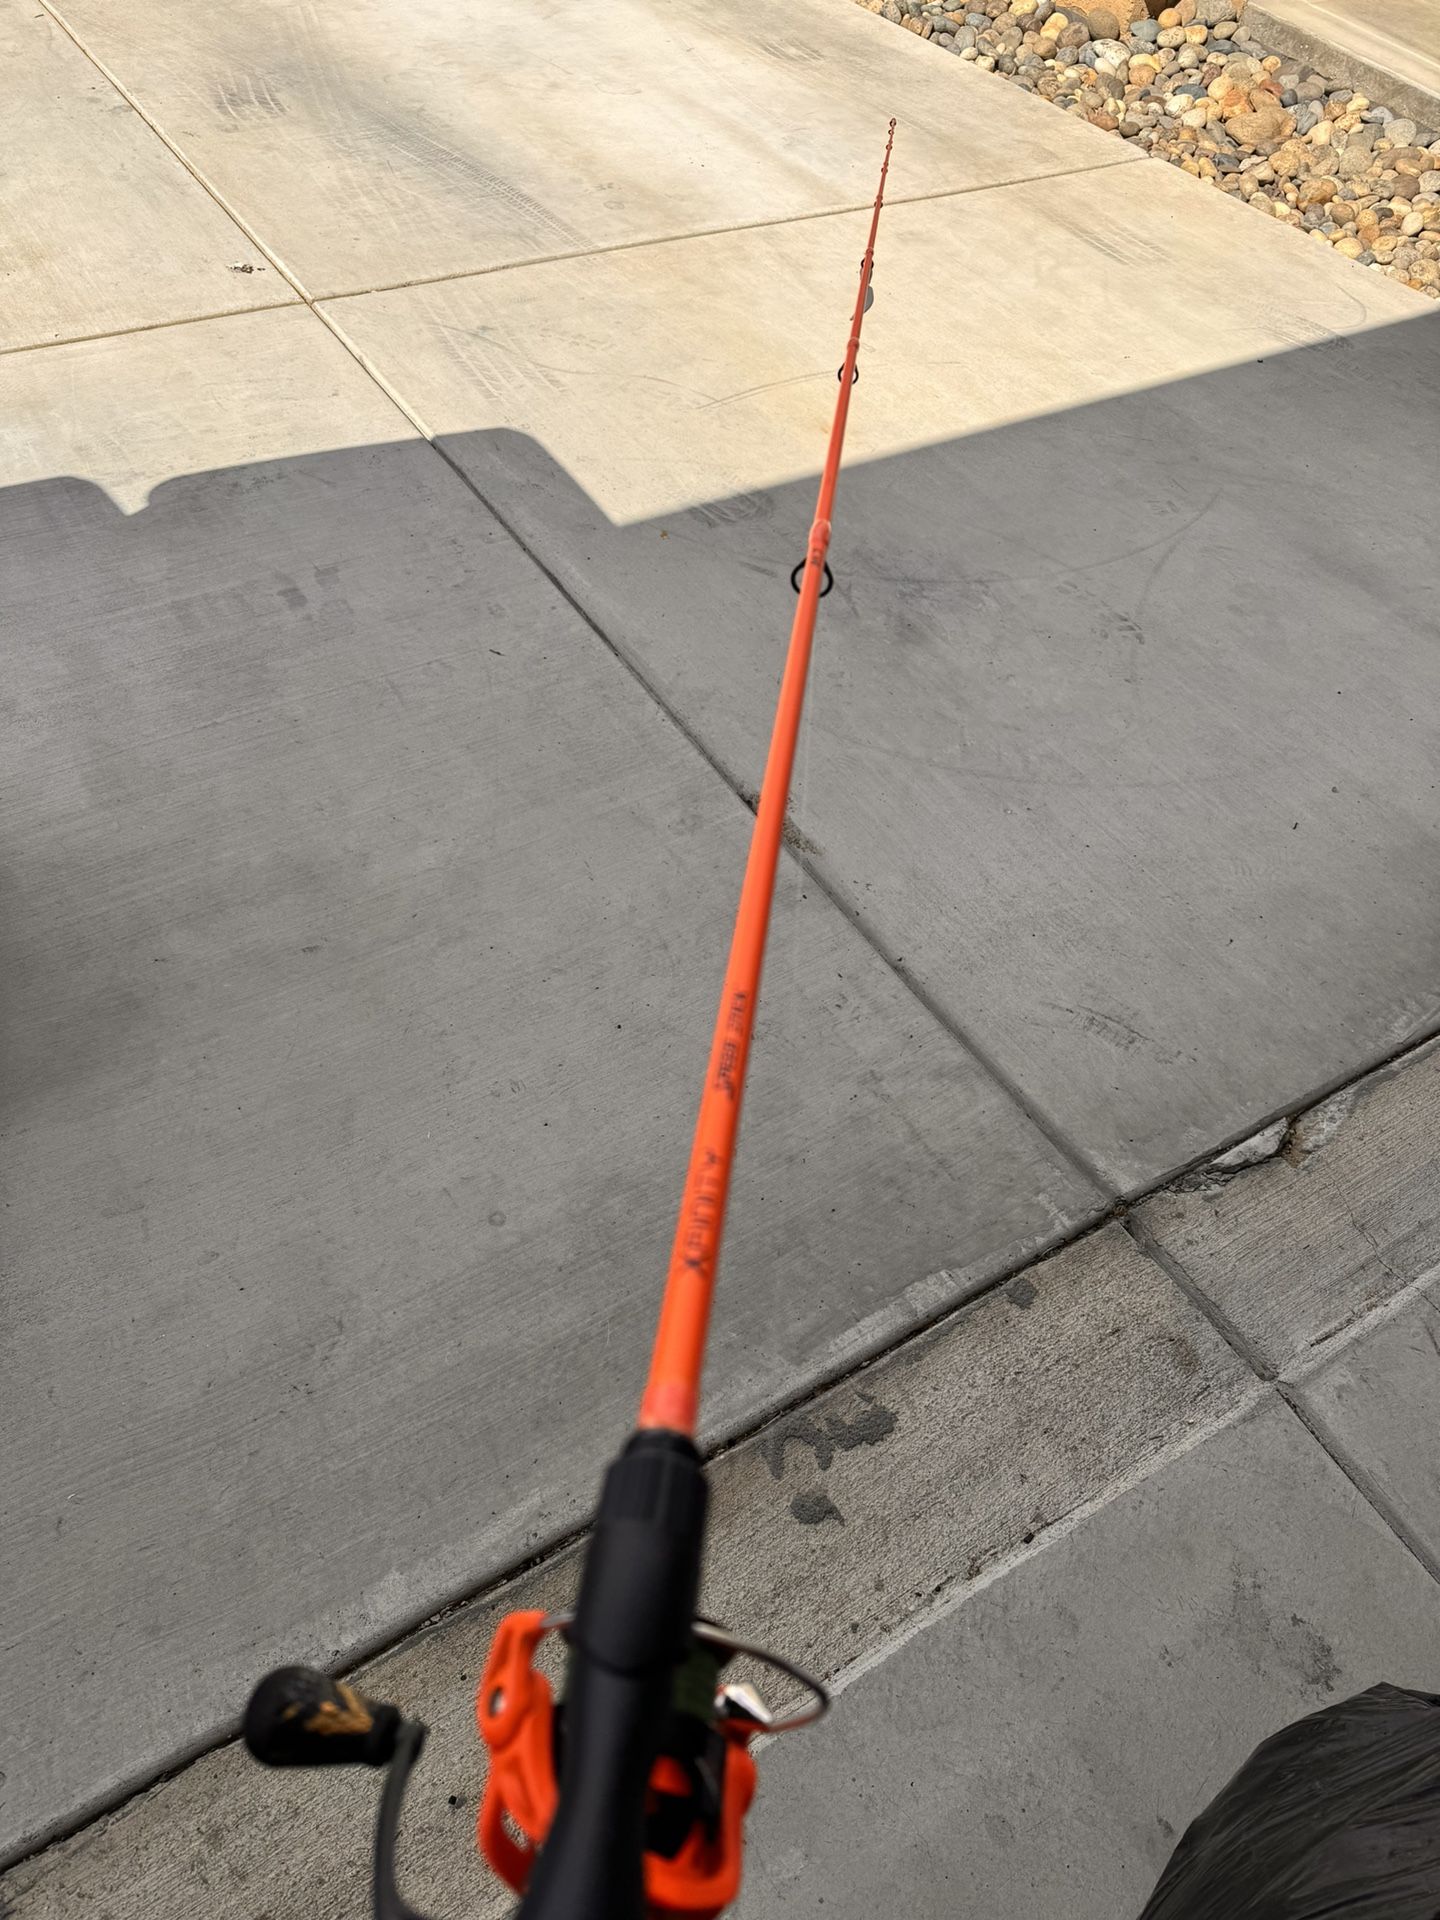 Fishing Rod & Reel Combo